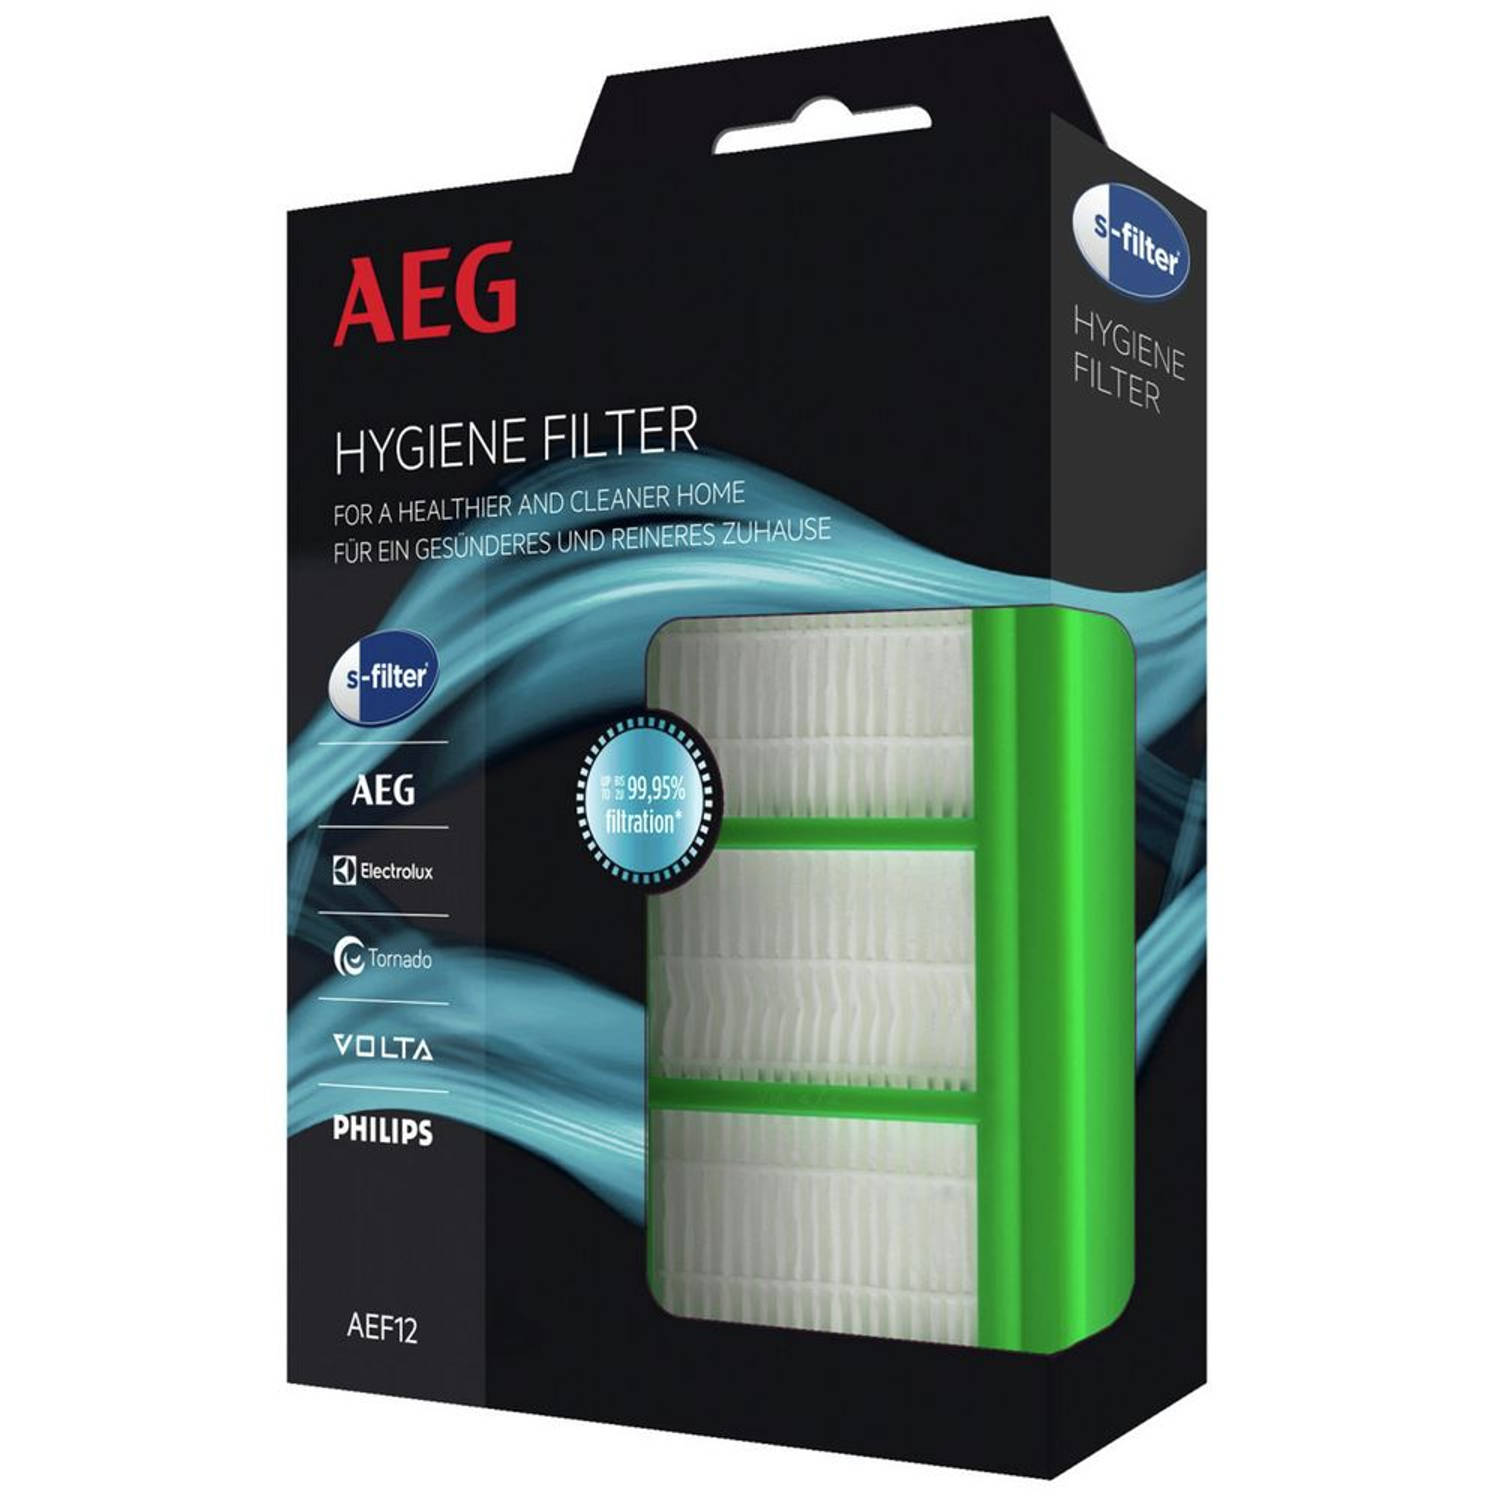 Aeg Hygiene Filter Aef12